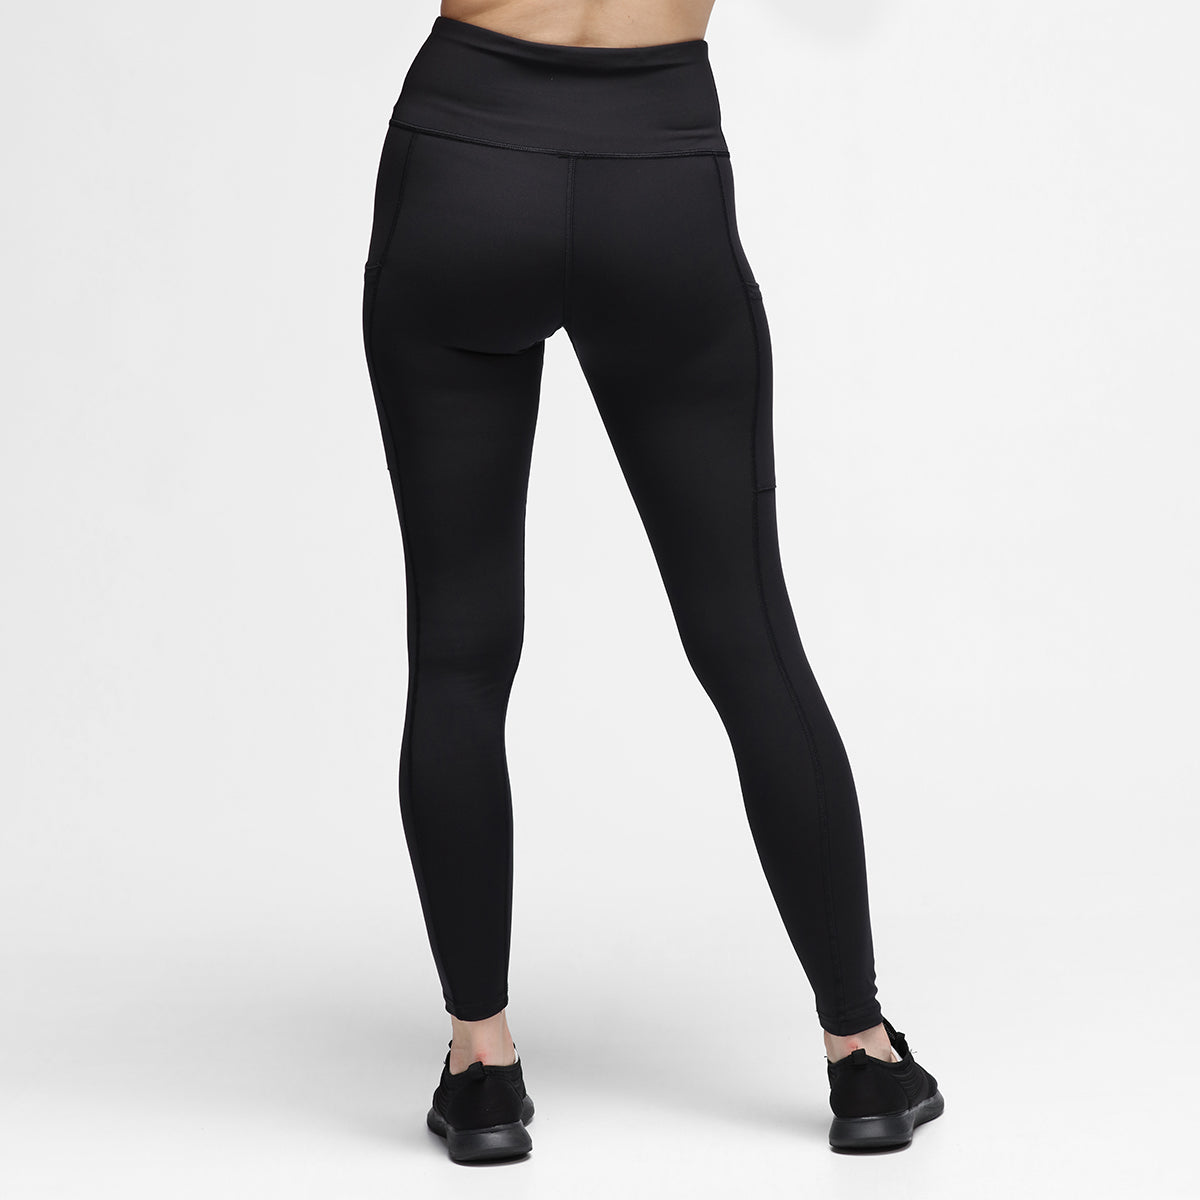 RBX activewear bootcut yoga pants / leggings. New - Depop